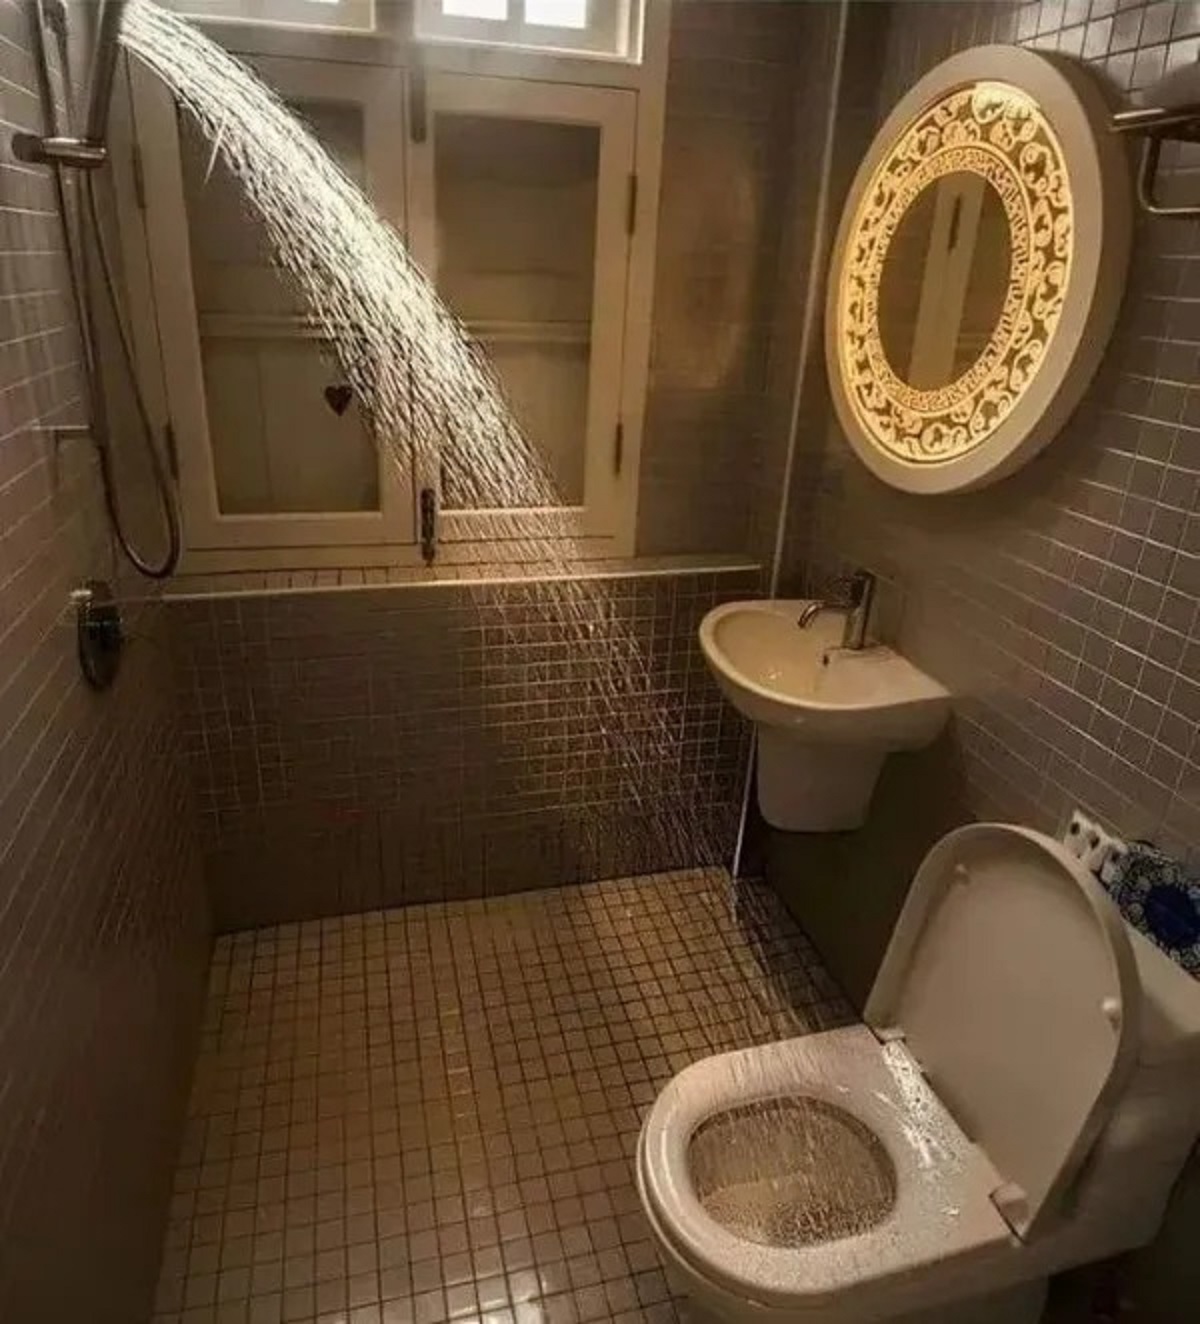 shower while you shit - O